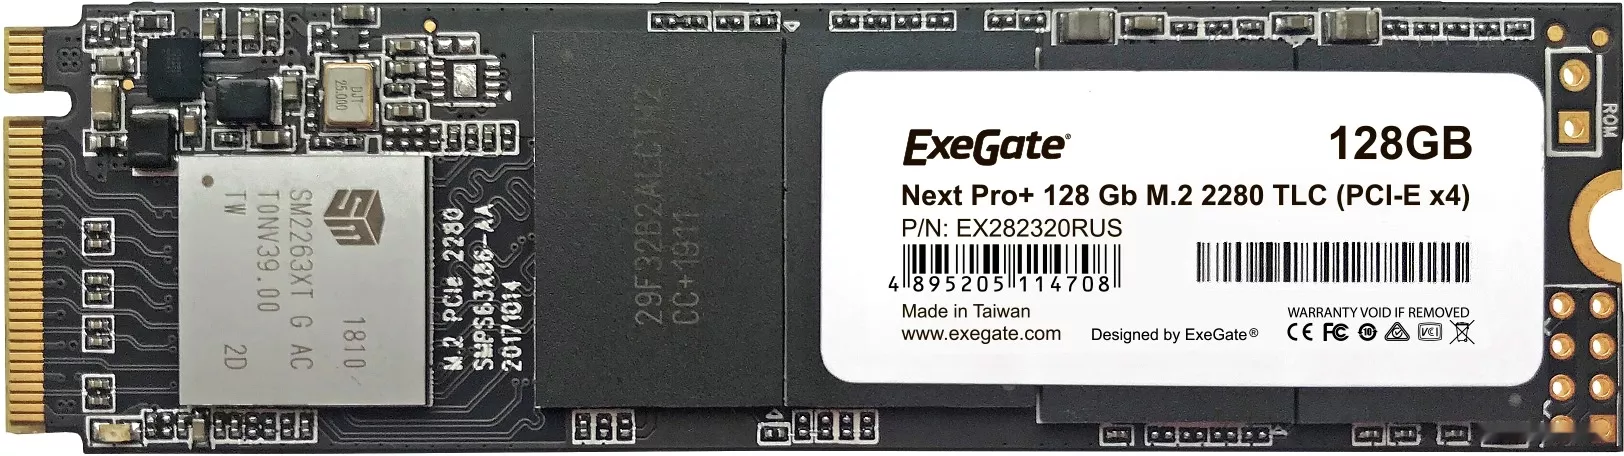 Жесткий диск SSD ExeGate Next Pro+ 512GB EX282322RUS фото